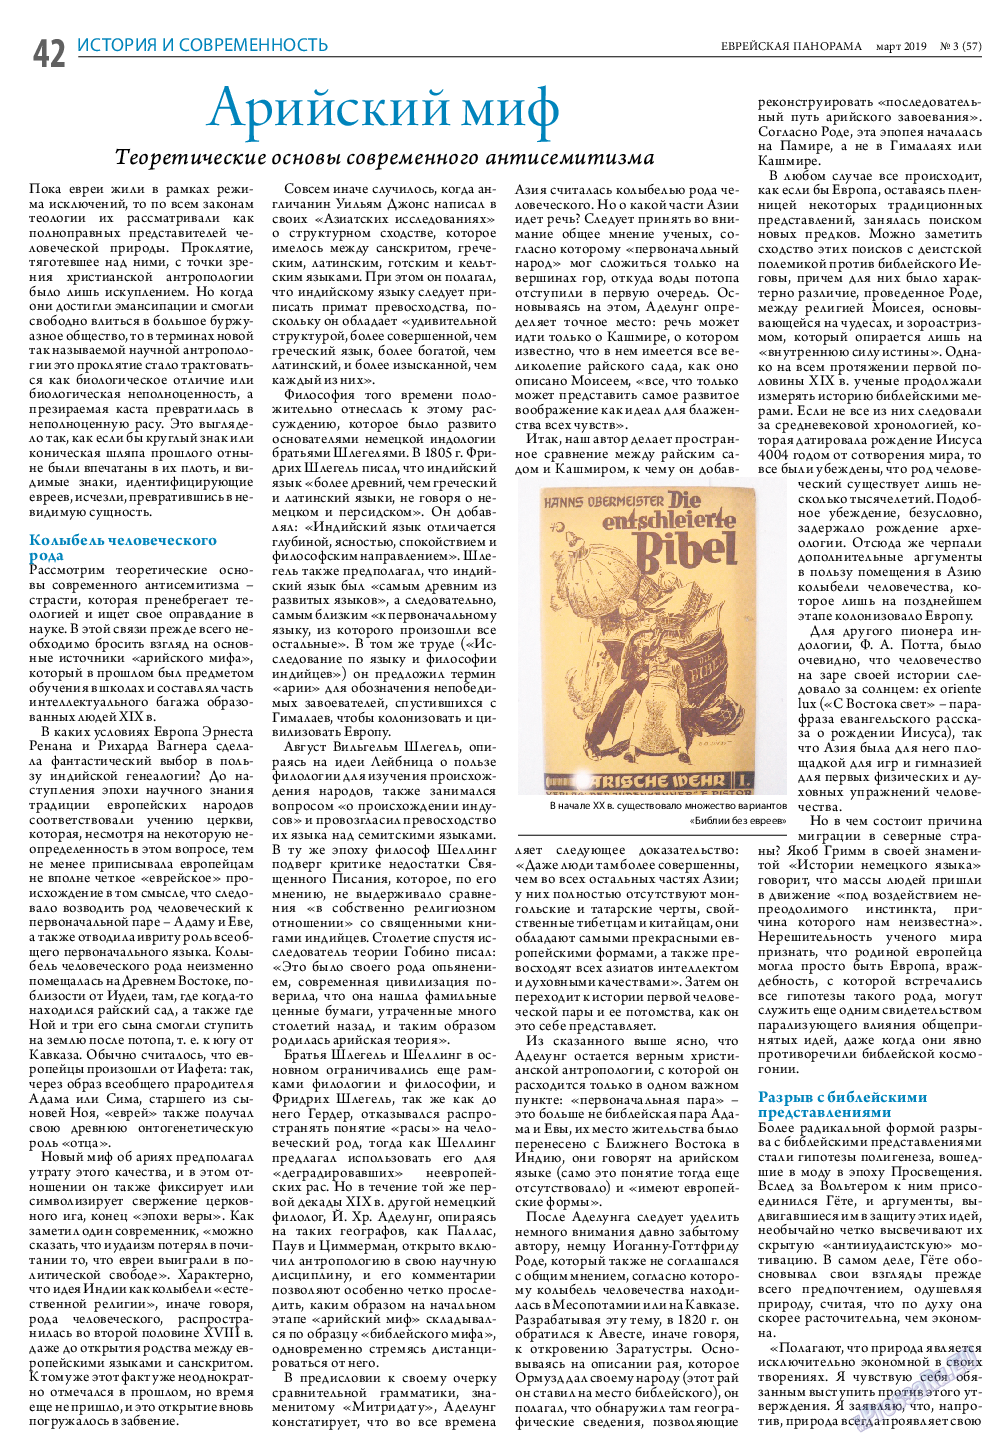 Еврейская панорама, газета. 2019 №3 стр.42